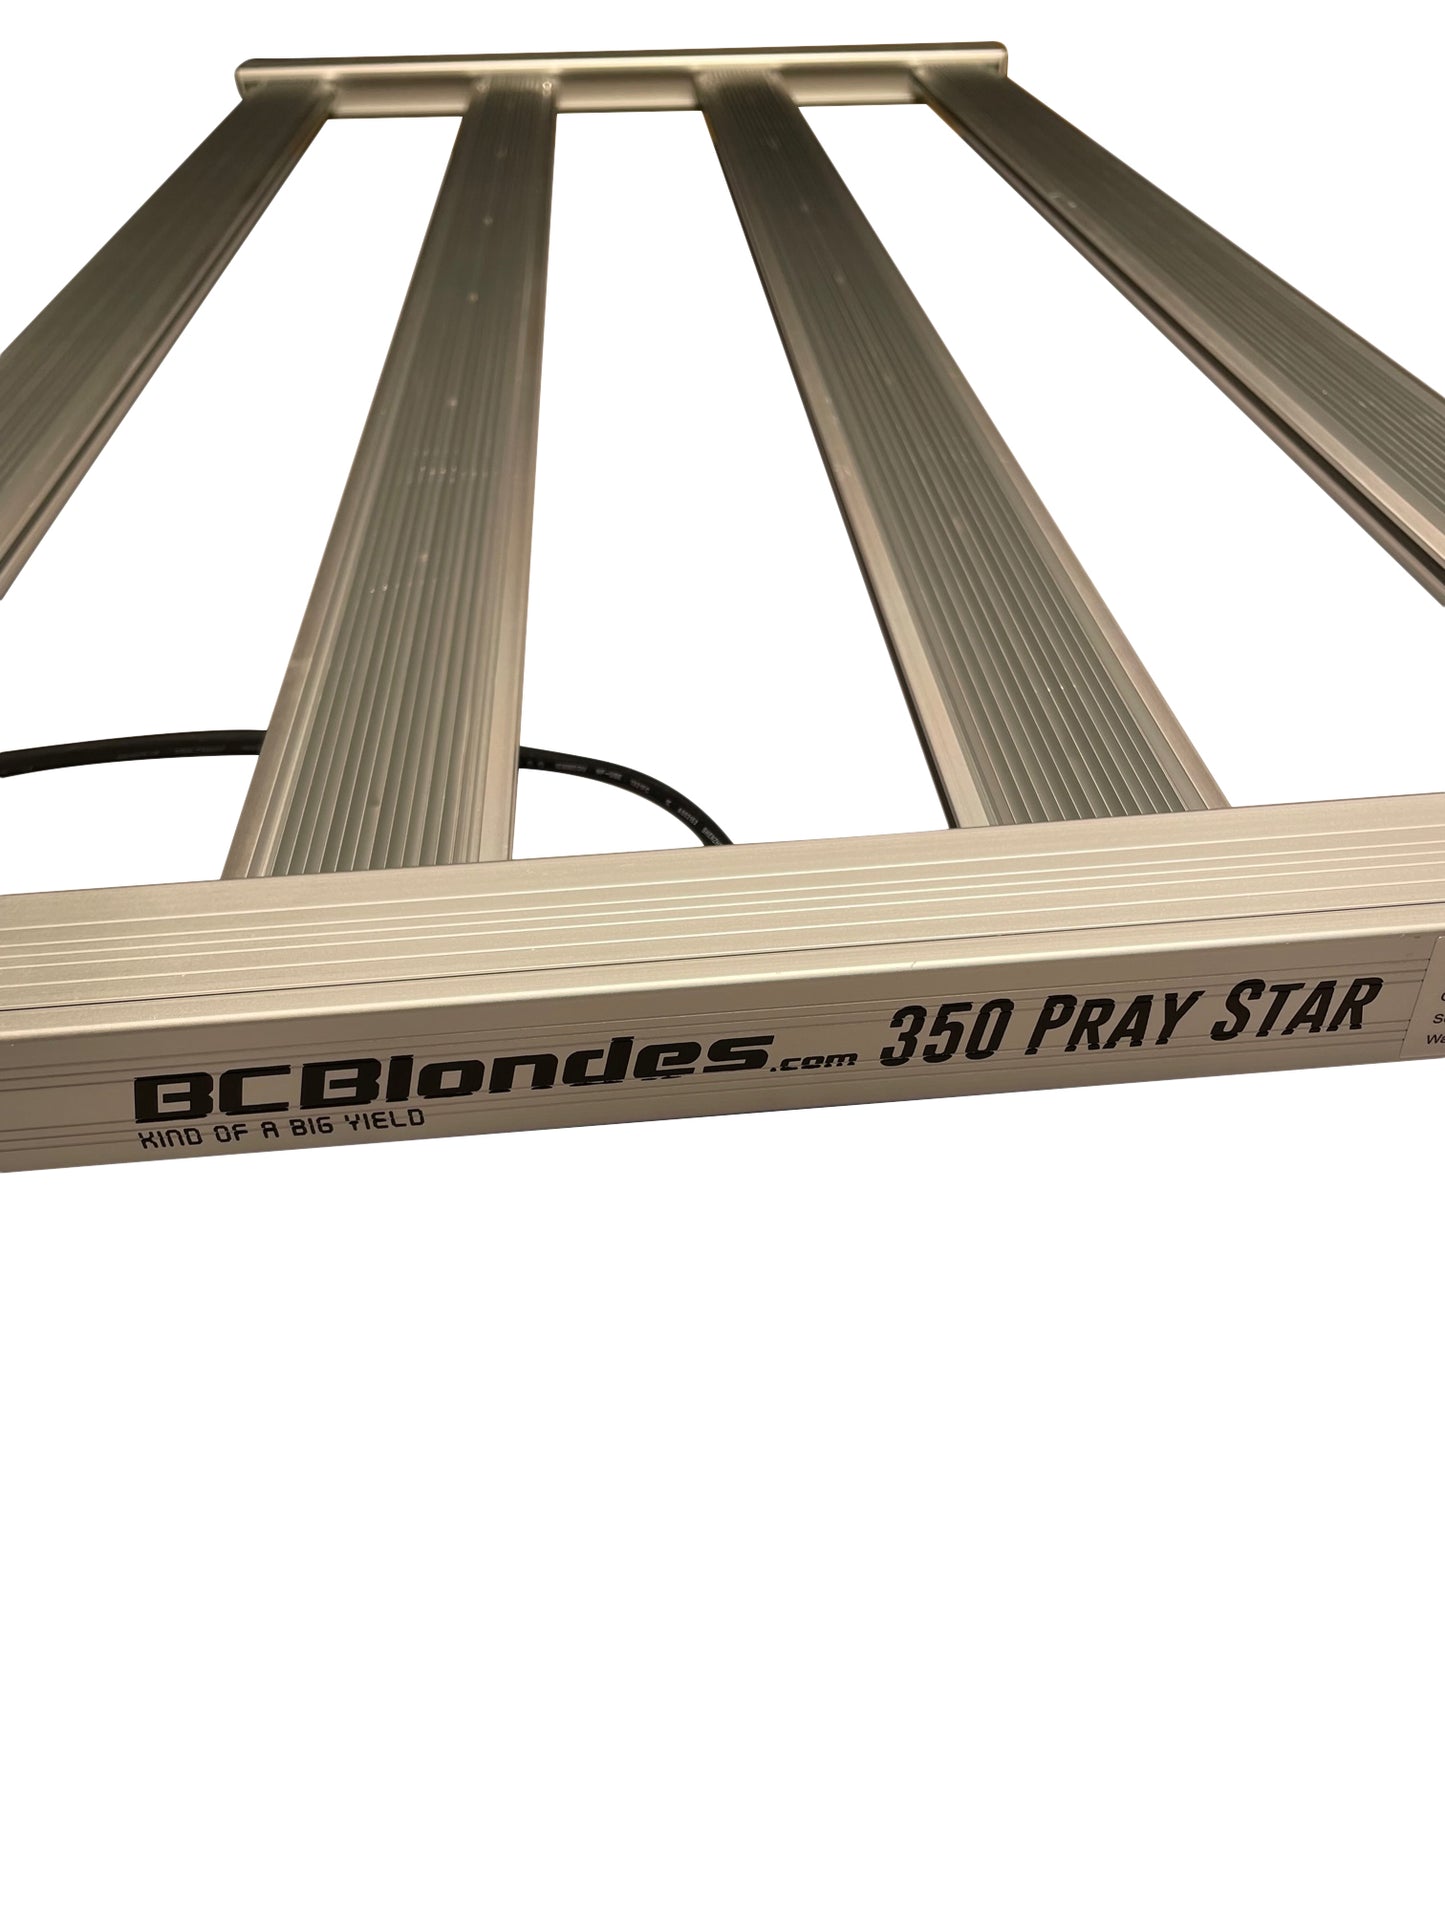 350 Pray Star Led Grow Light - 4x2